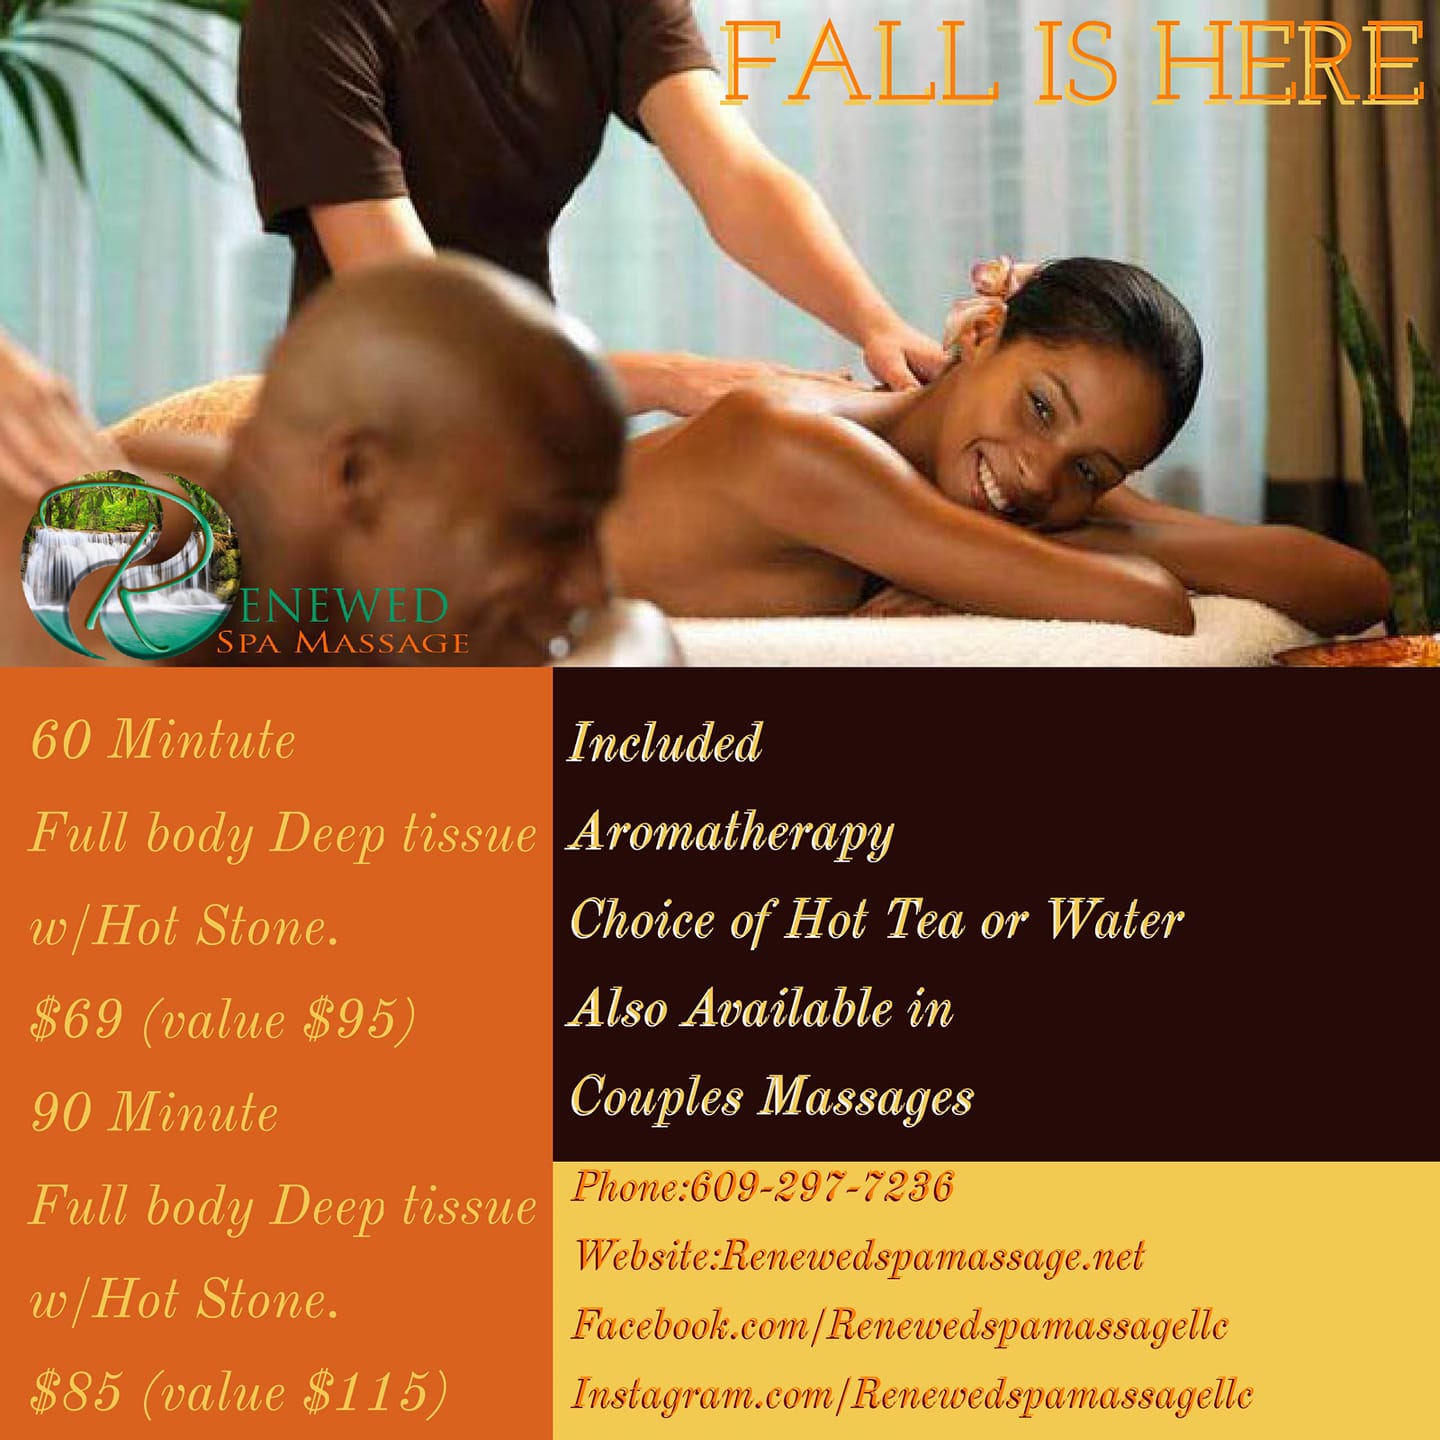 Renewed Spa Massage 21 NJ-31, Pennington New Jersey 08534